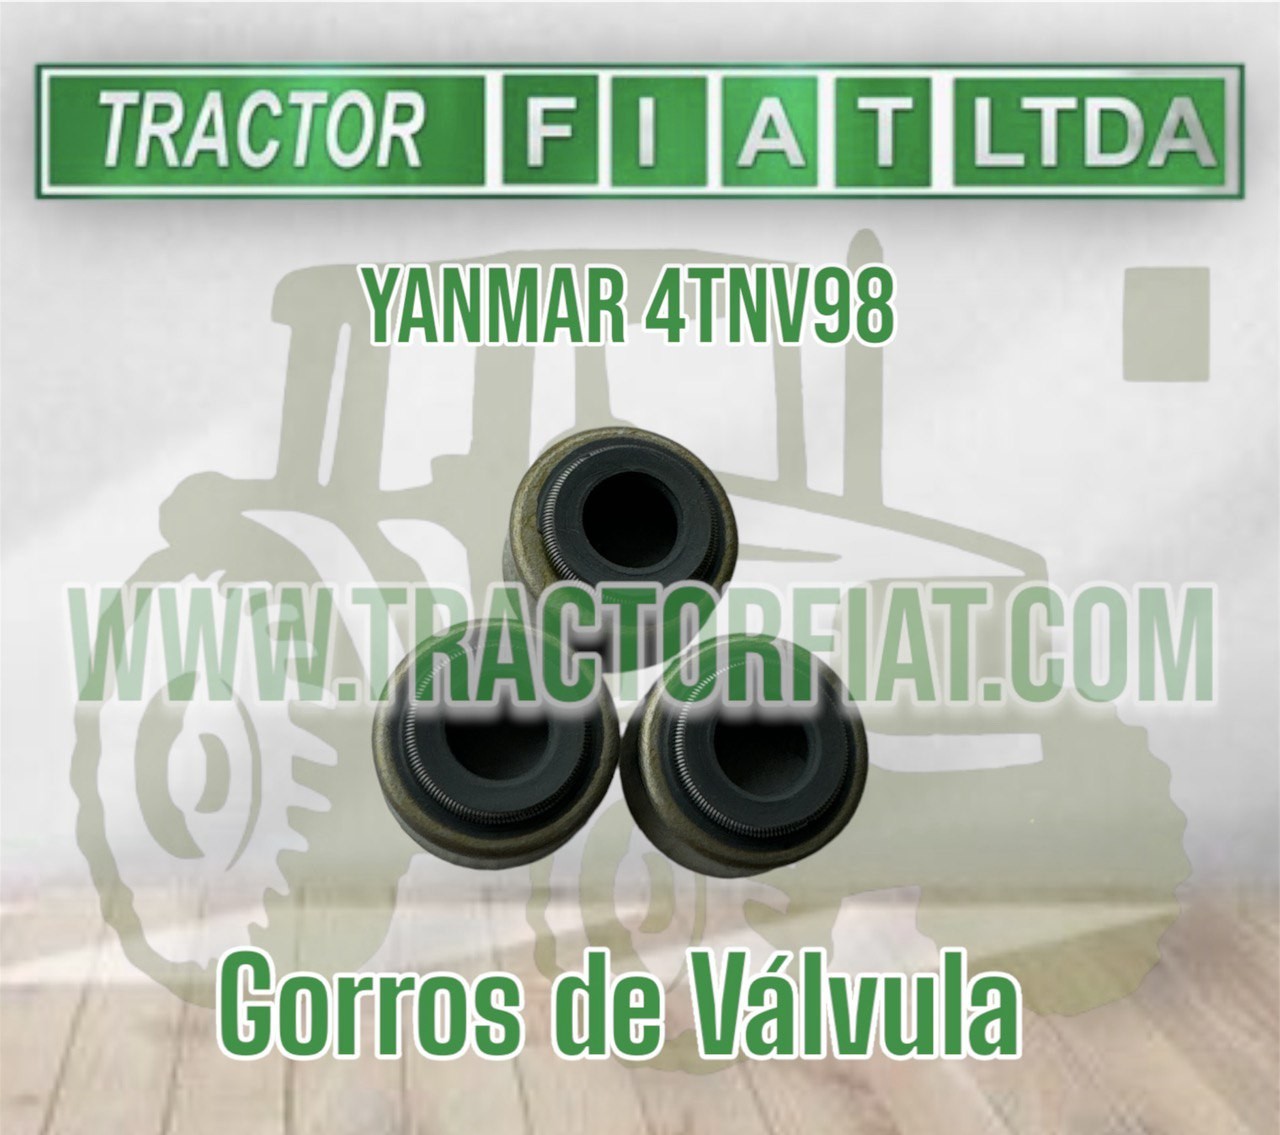 GORROS DE VALVULA - MOTOR YANMAR 4TNV98